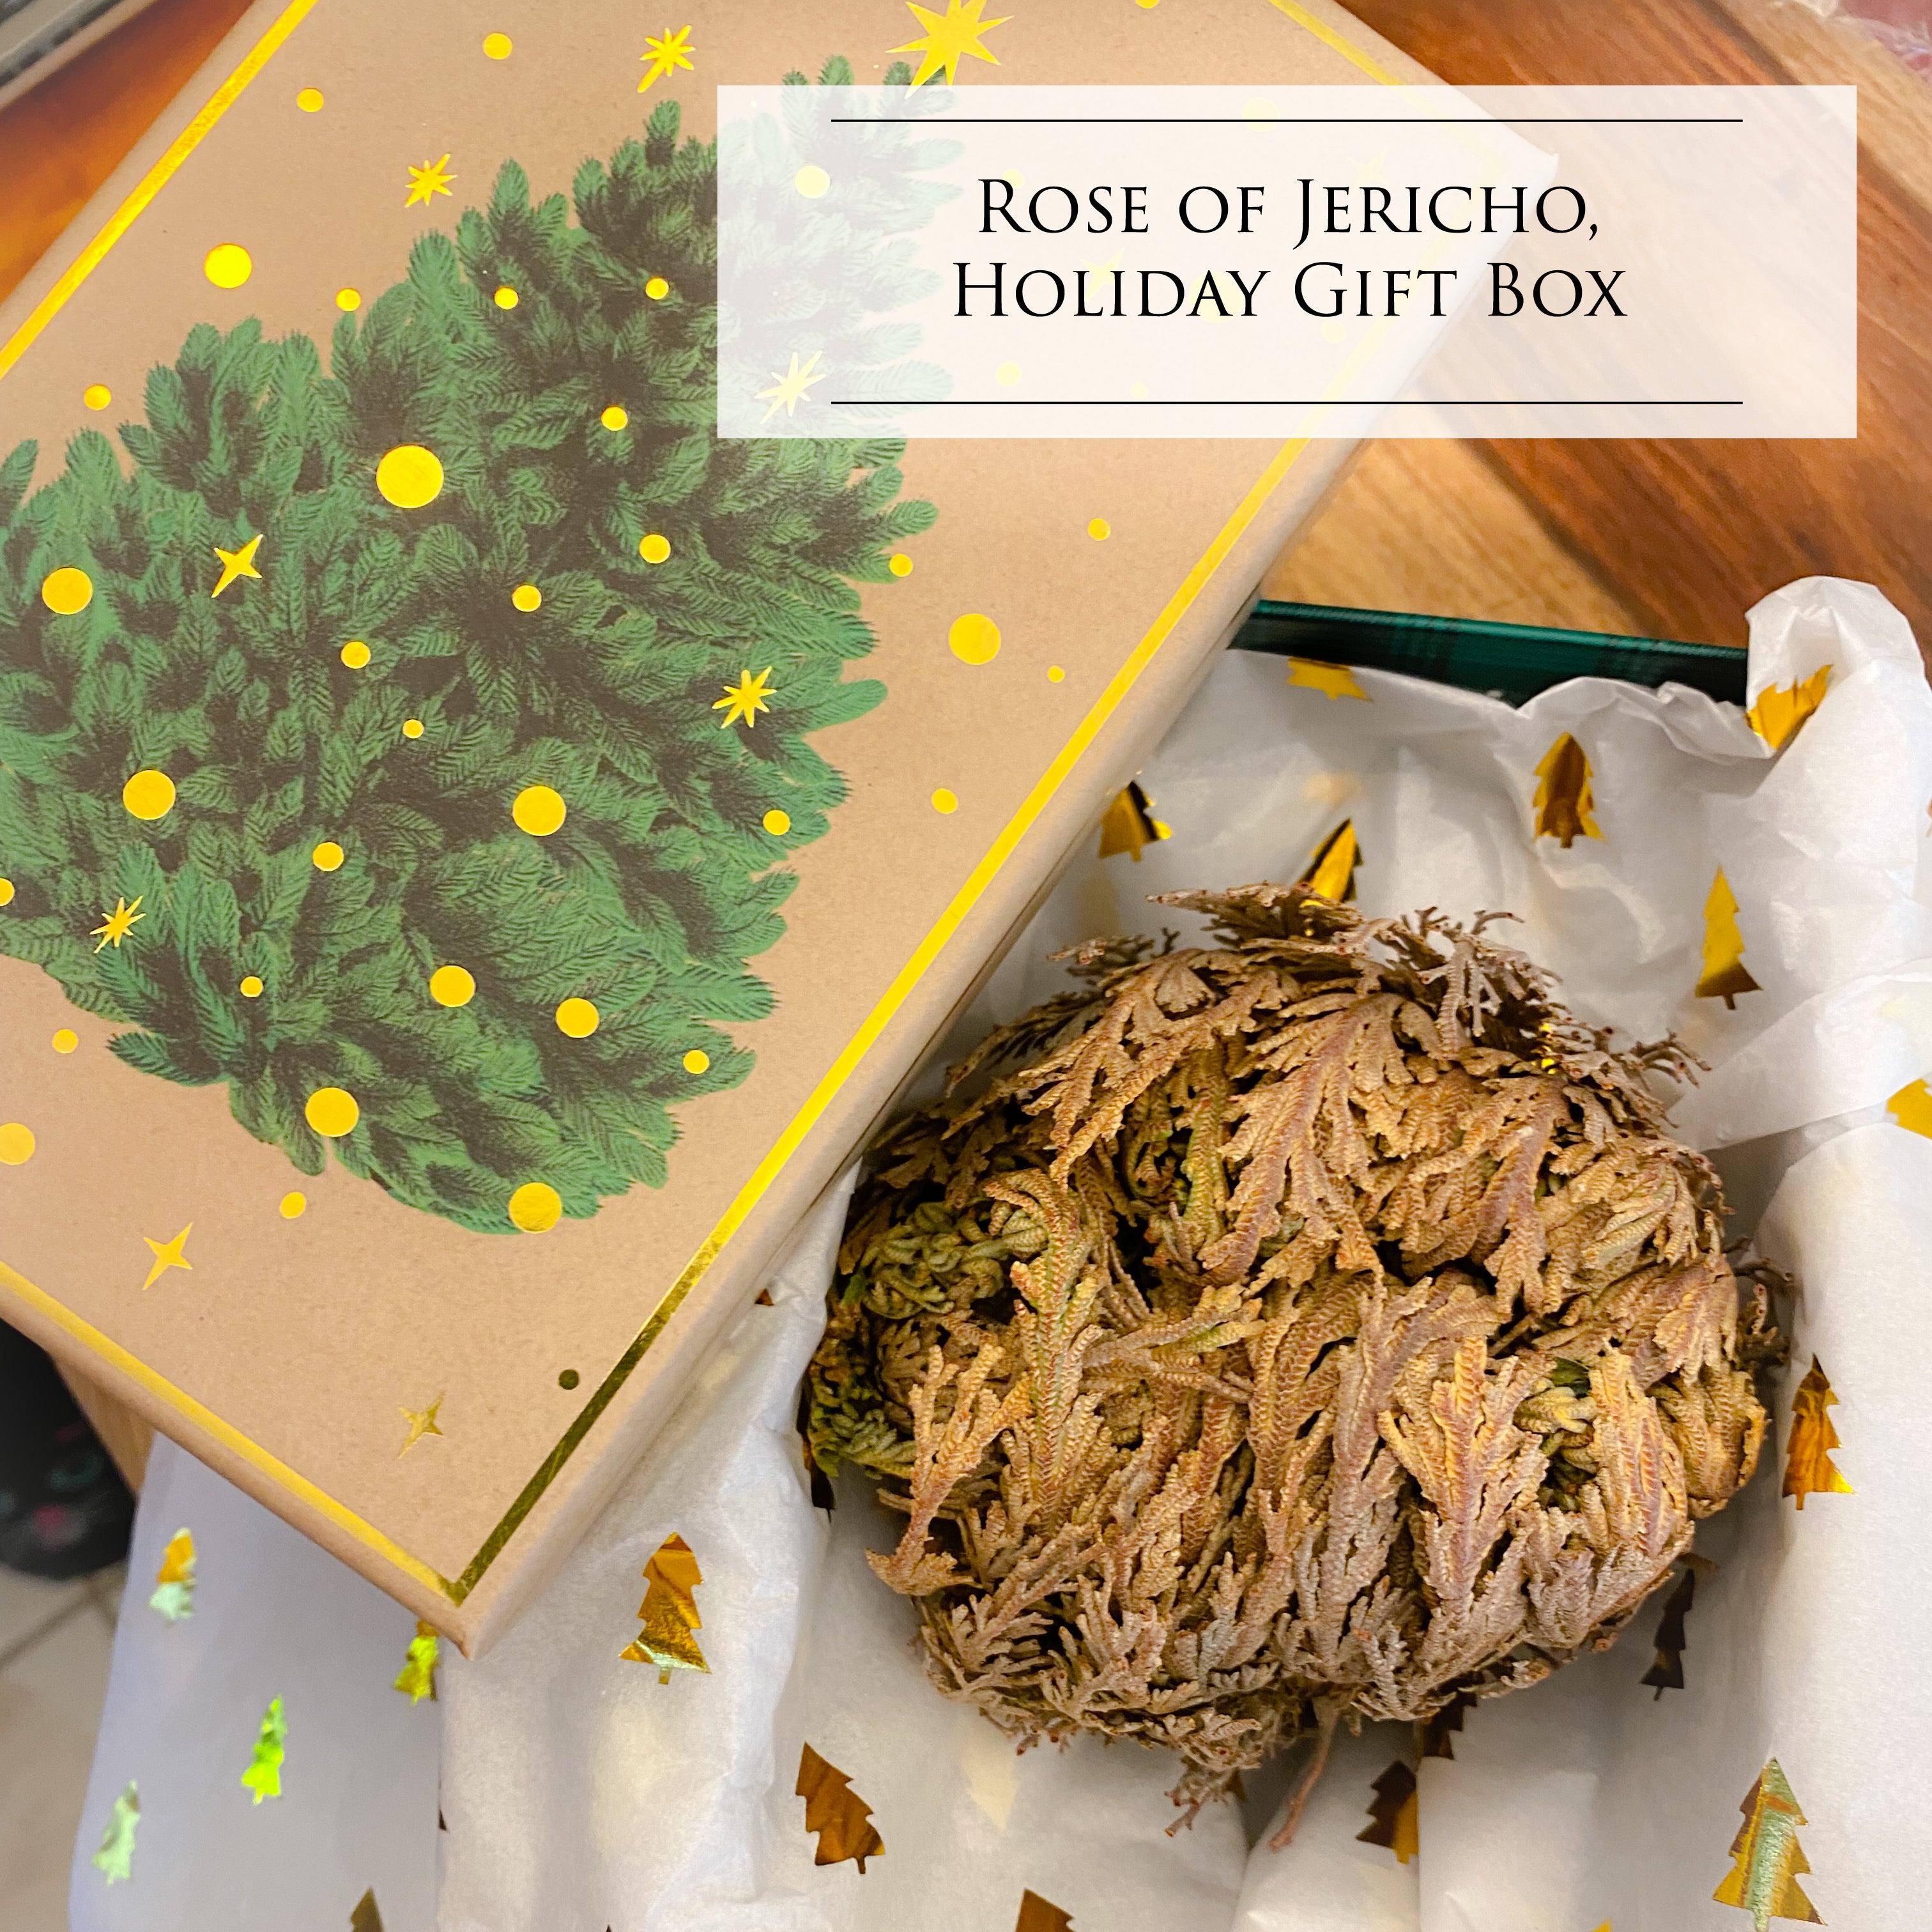 Rose of Jericho, Holiday Gift Box